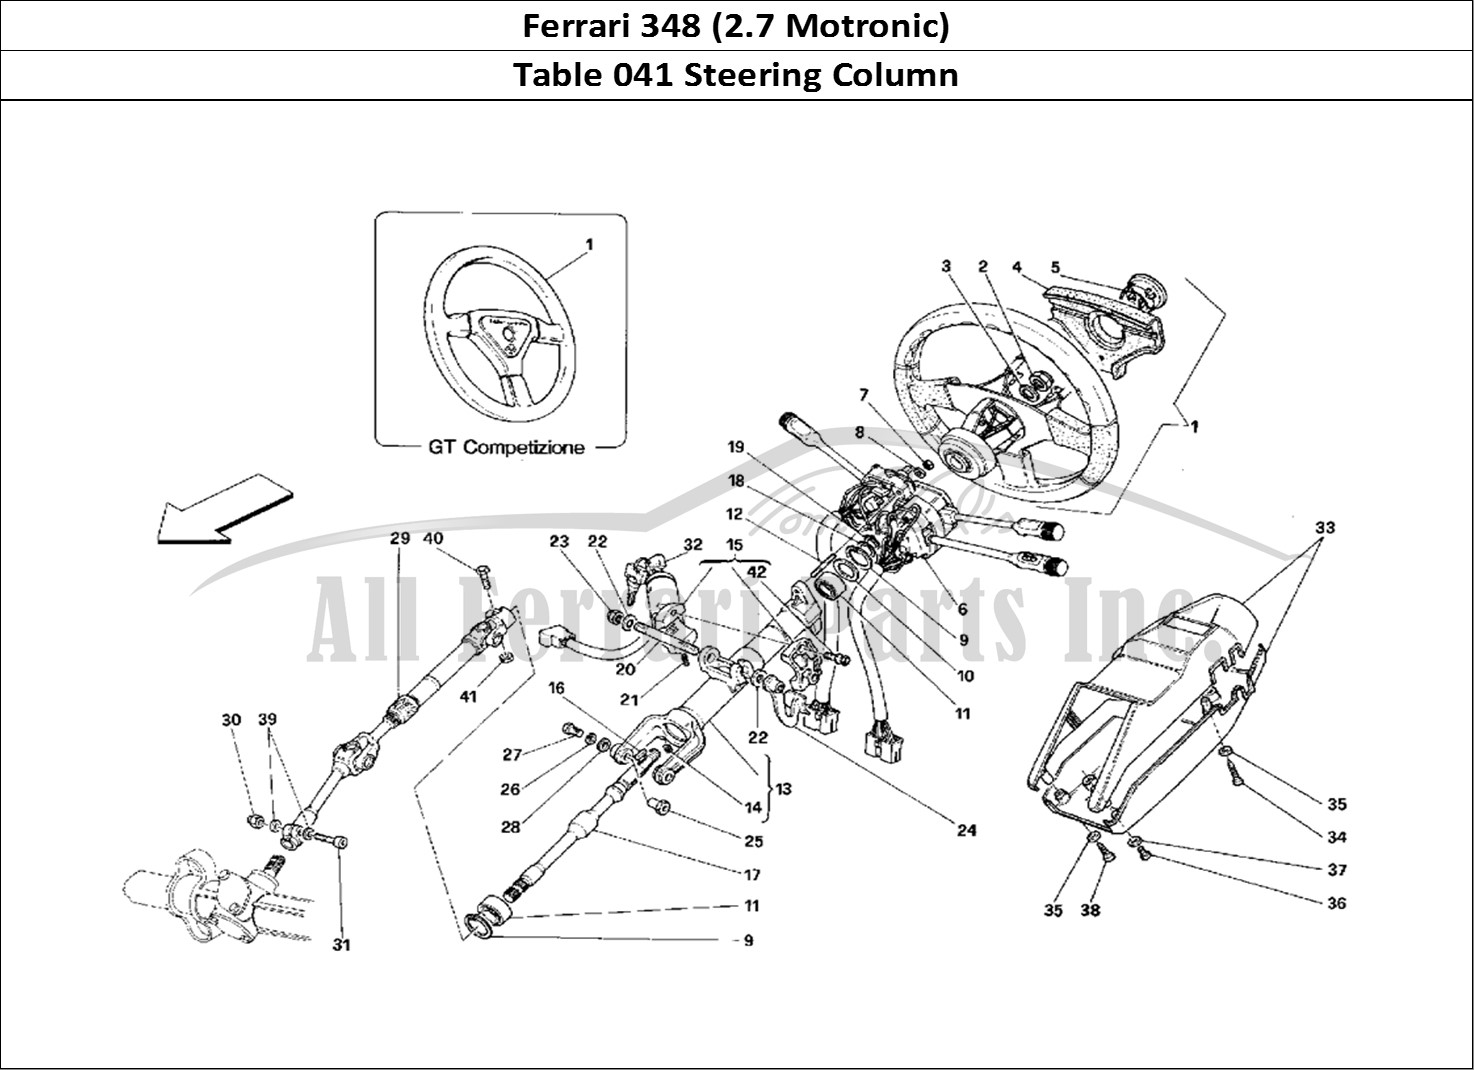 Ferrari Parts Ferrari 348 (2.7 Motronic) Page 041 Steering Column